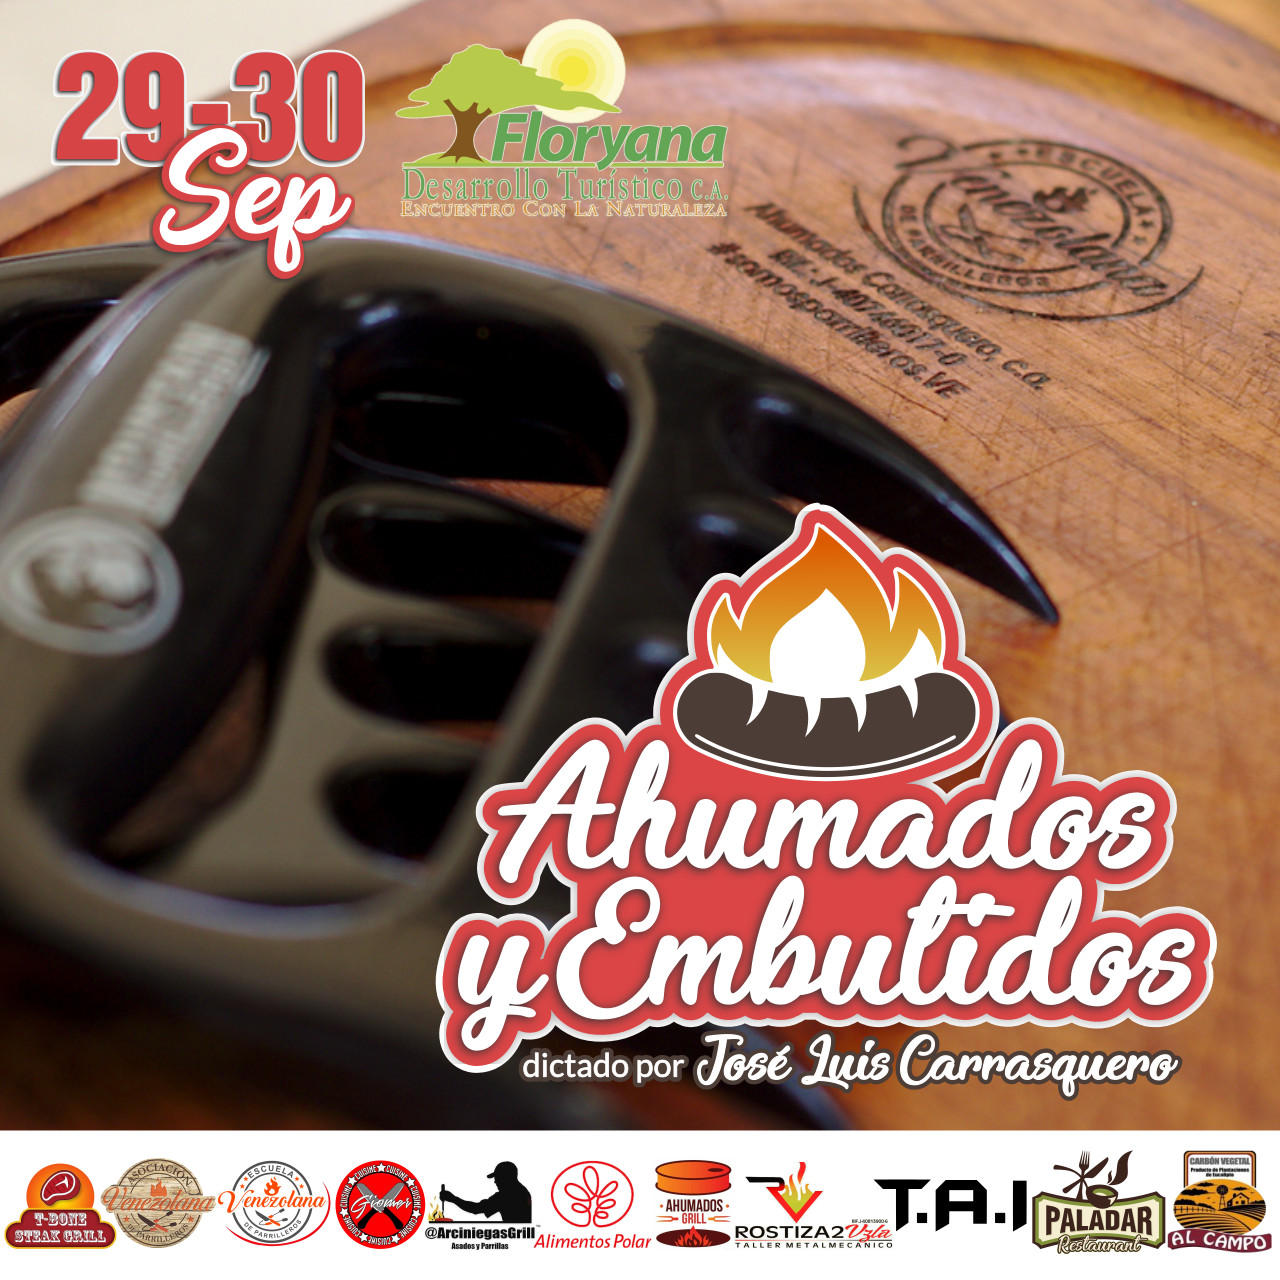 PC-AhumadosEmbutidos-Sept18_3